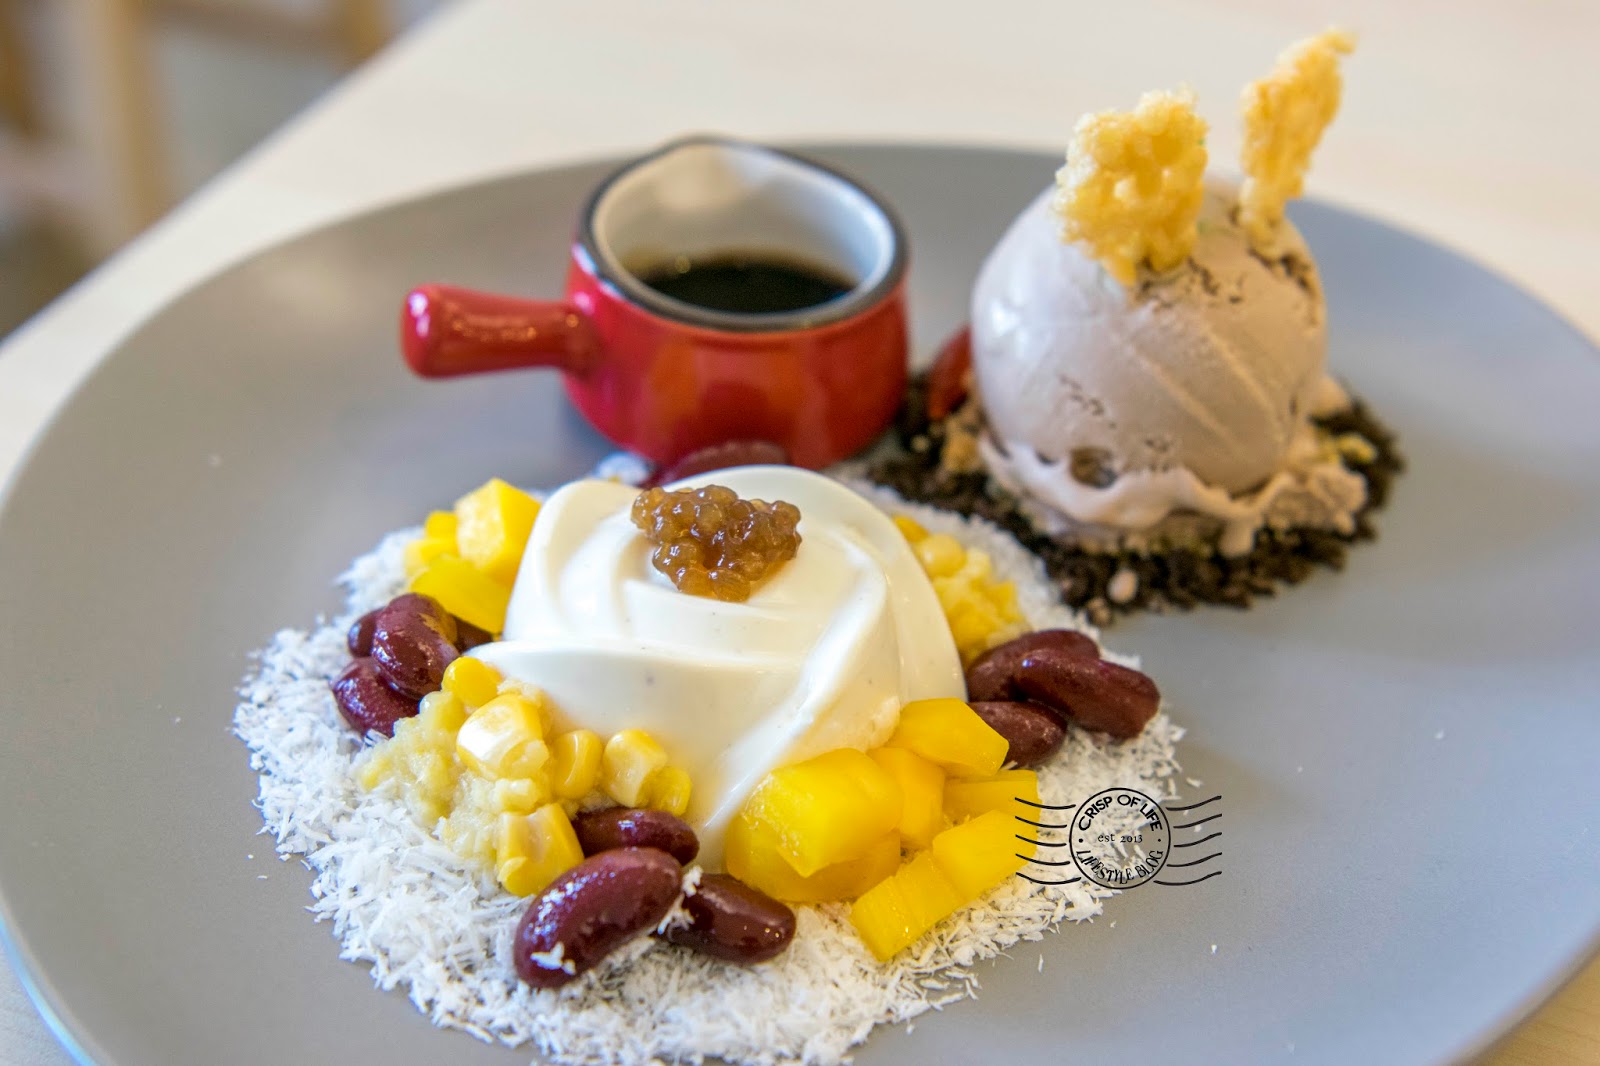 The Craftisan Cafe's New Dessert